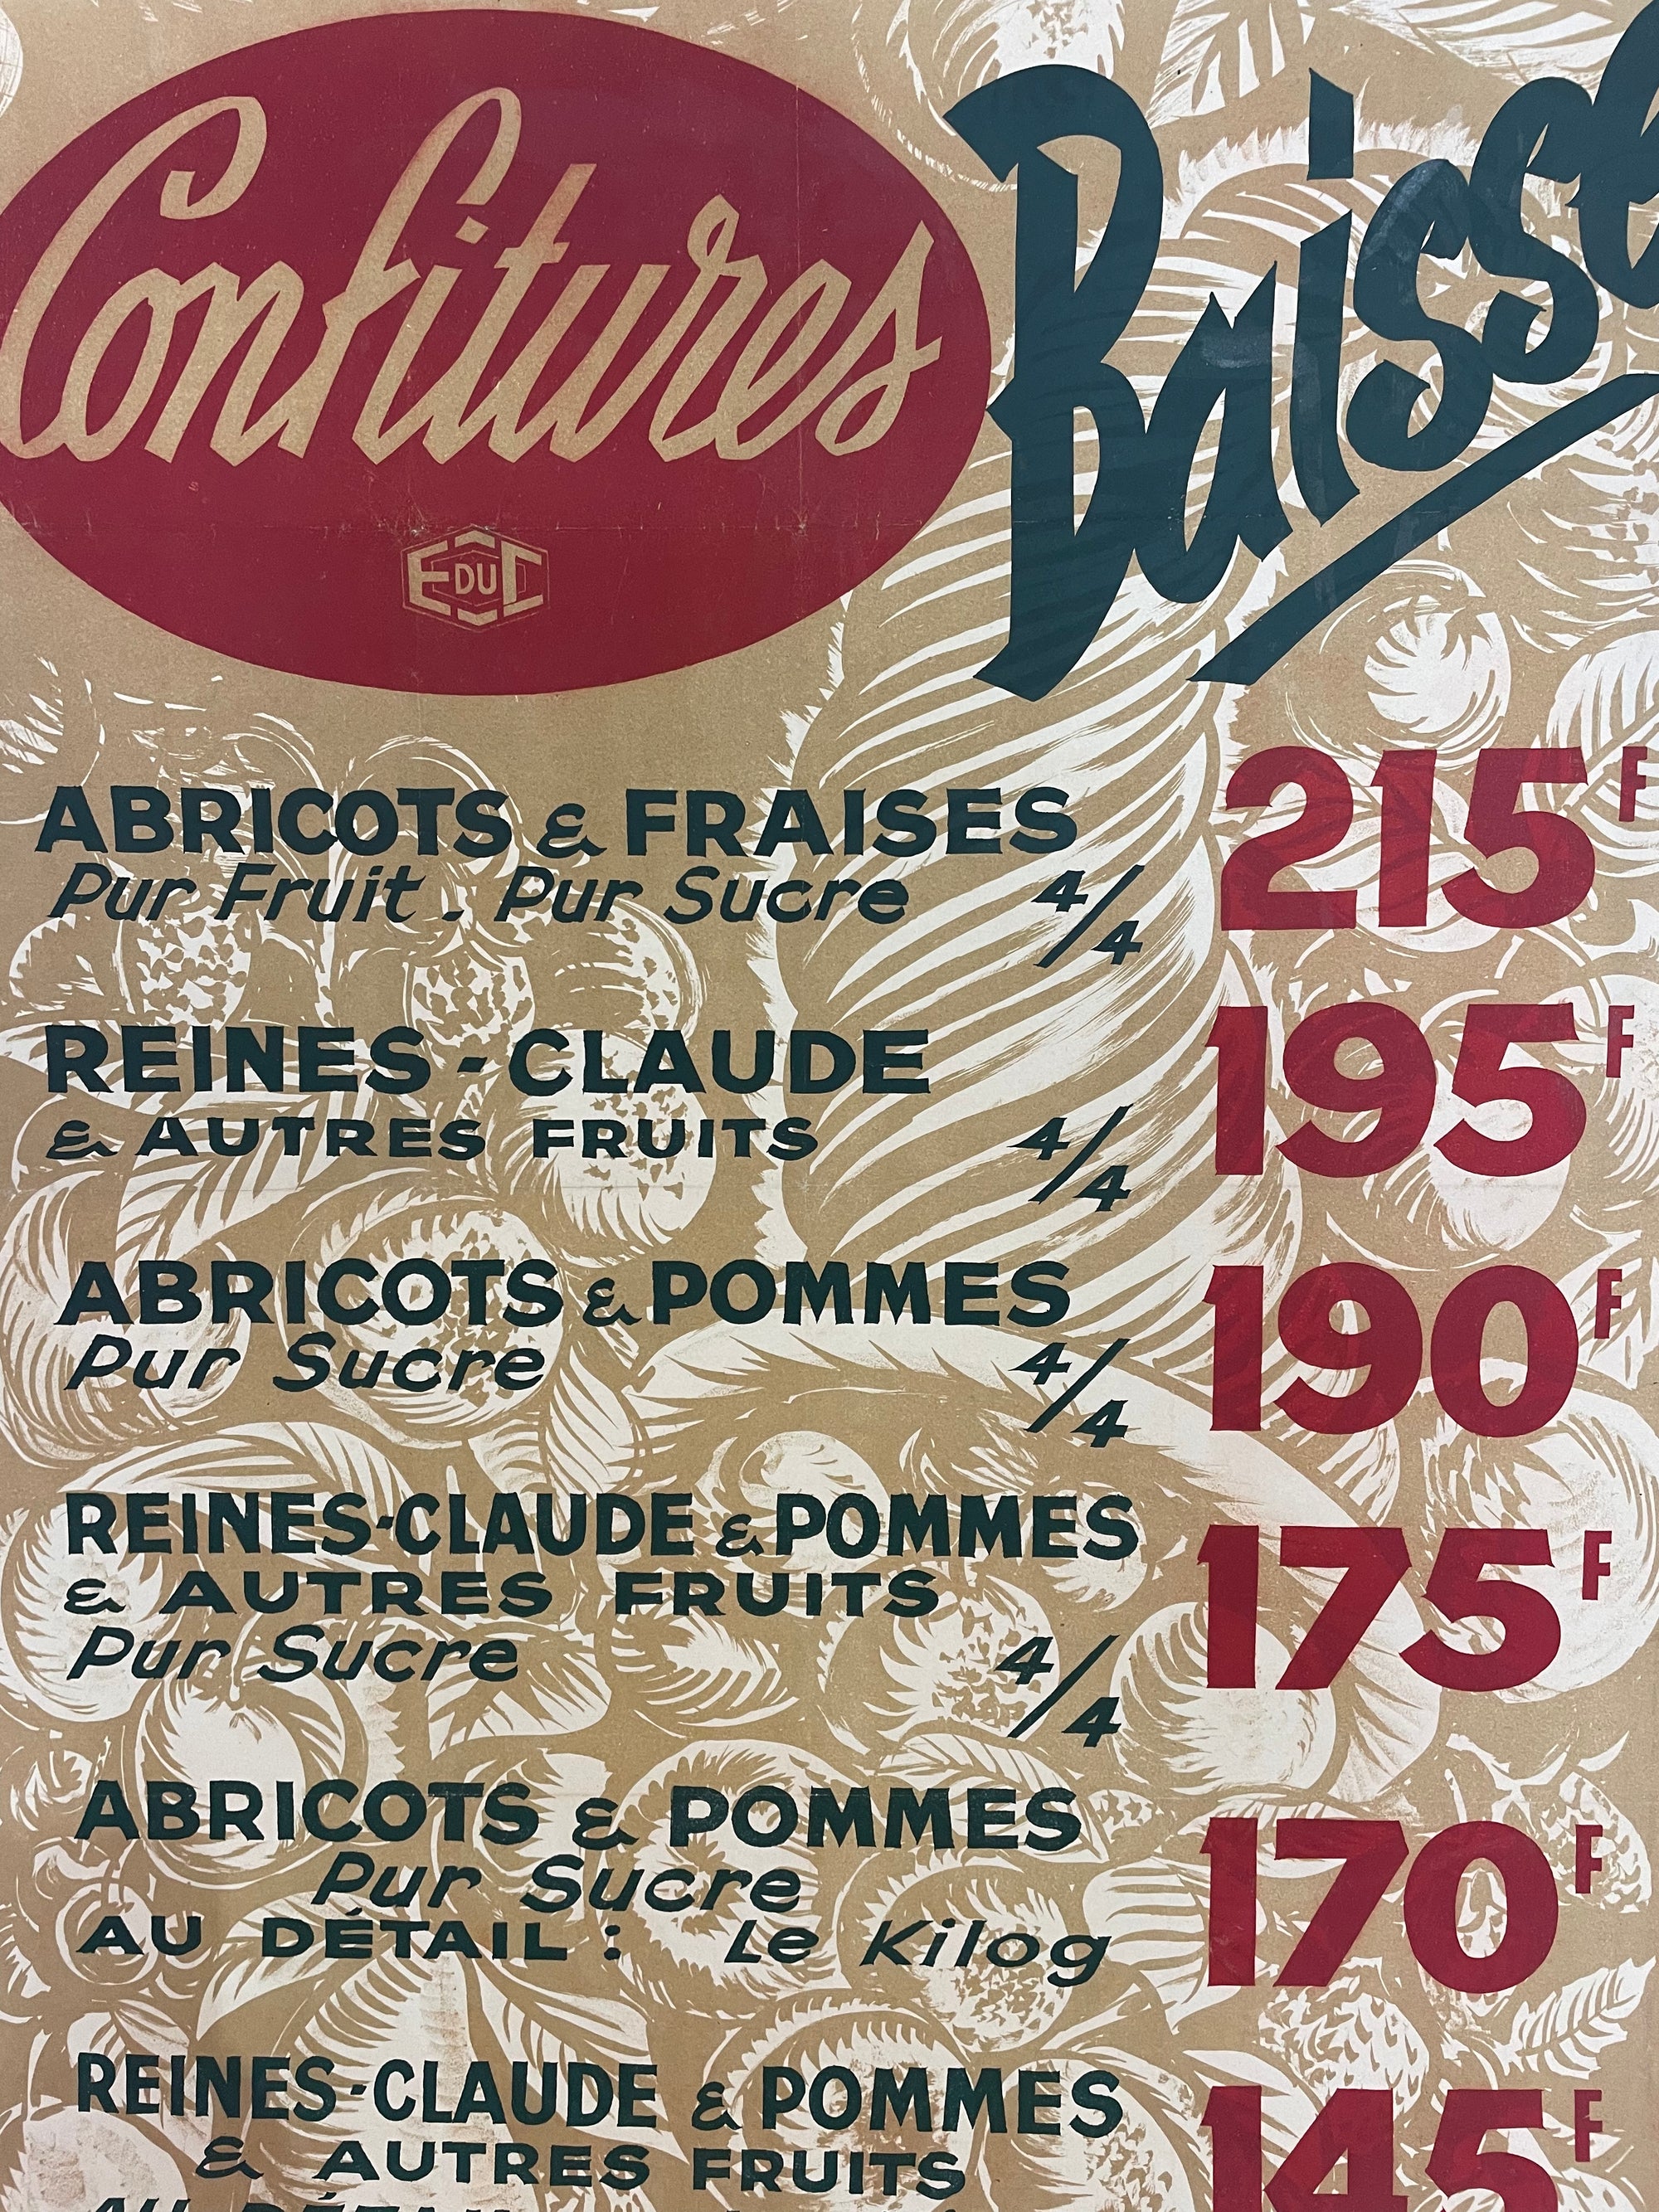 Confitures Baisse Vintage Poster by Bussac